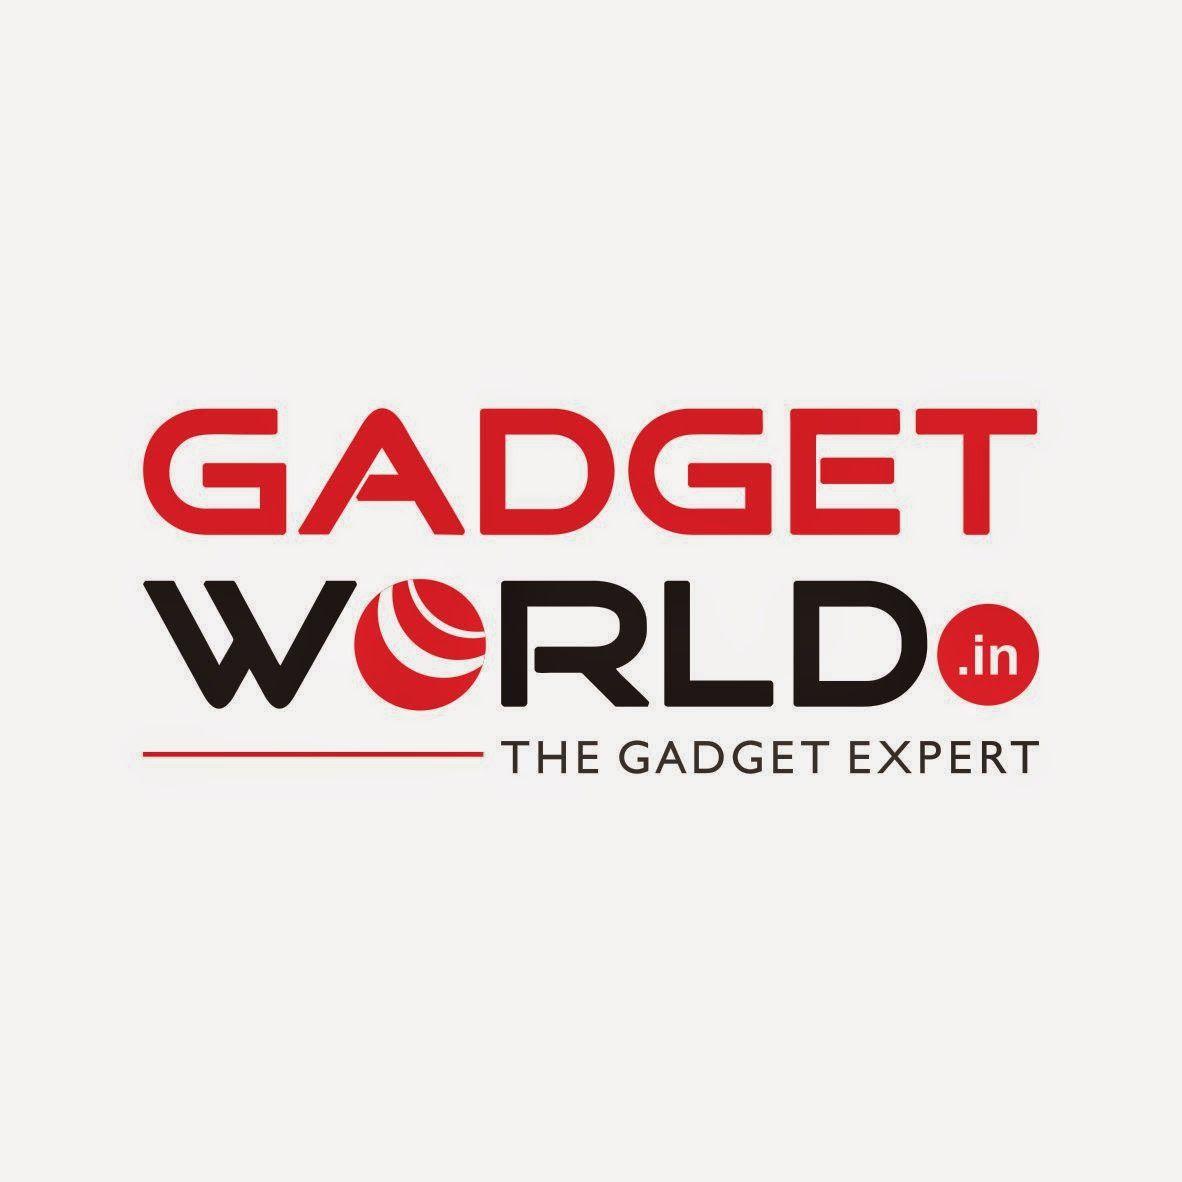 Gadgets Logo - Gadget World brand logo. Designed by Brand care communications. Bcc ...